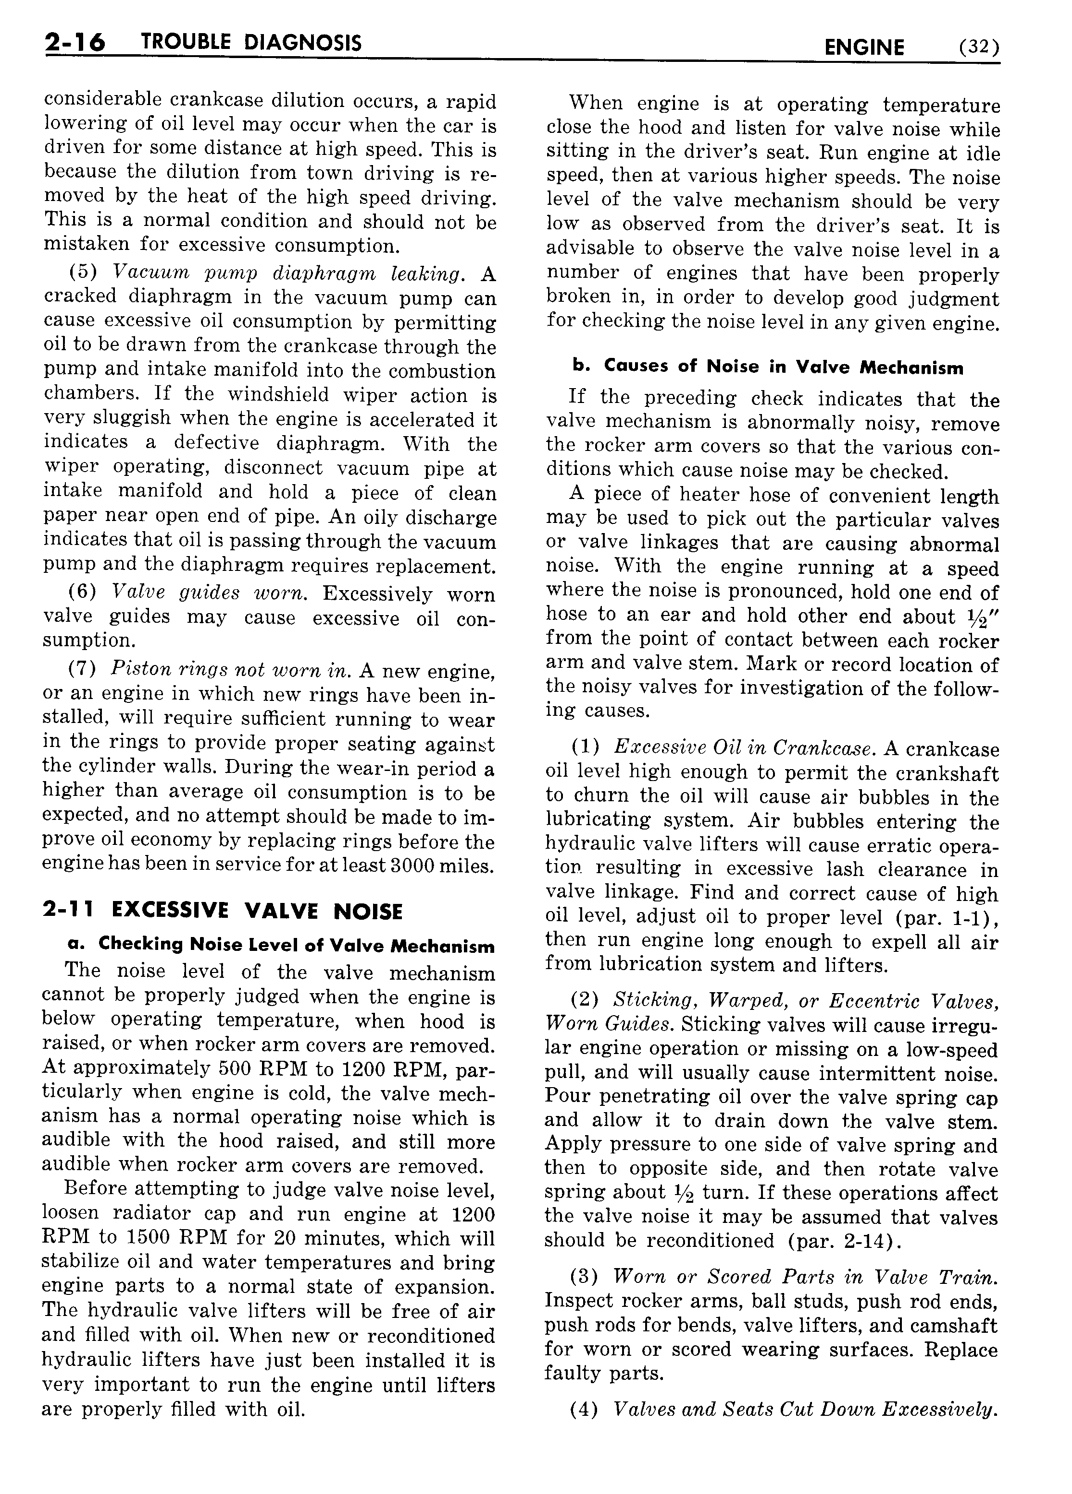 n_03 1954 Buick Shop Manual - Engine-016-016.jpg